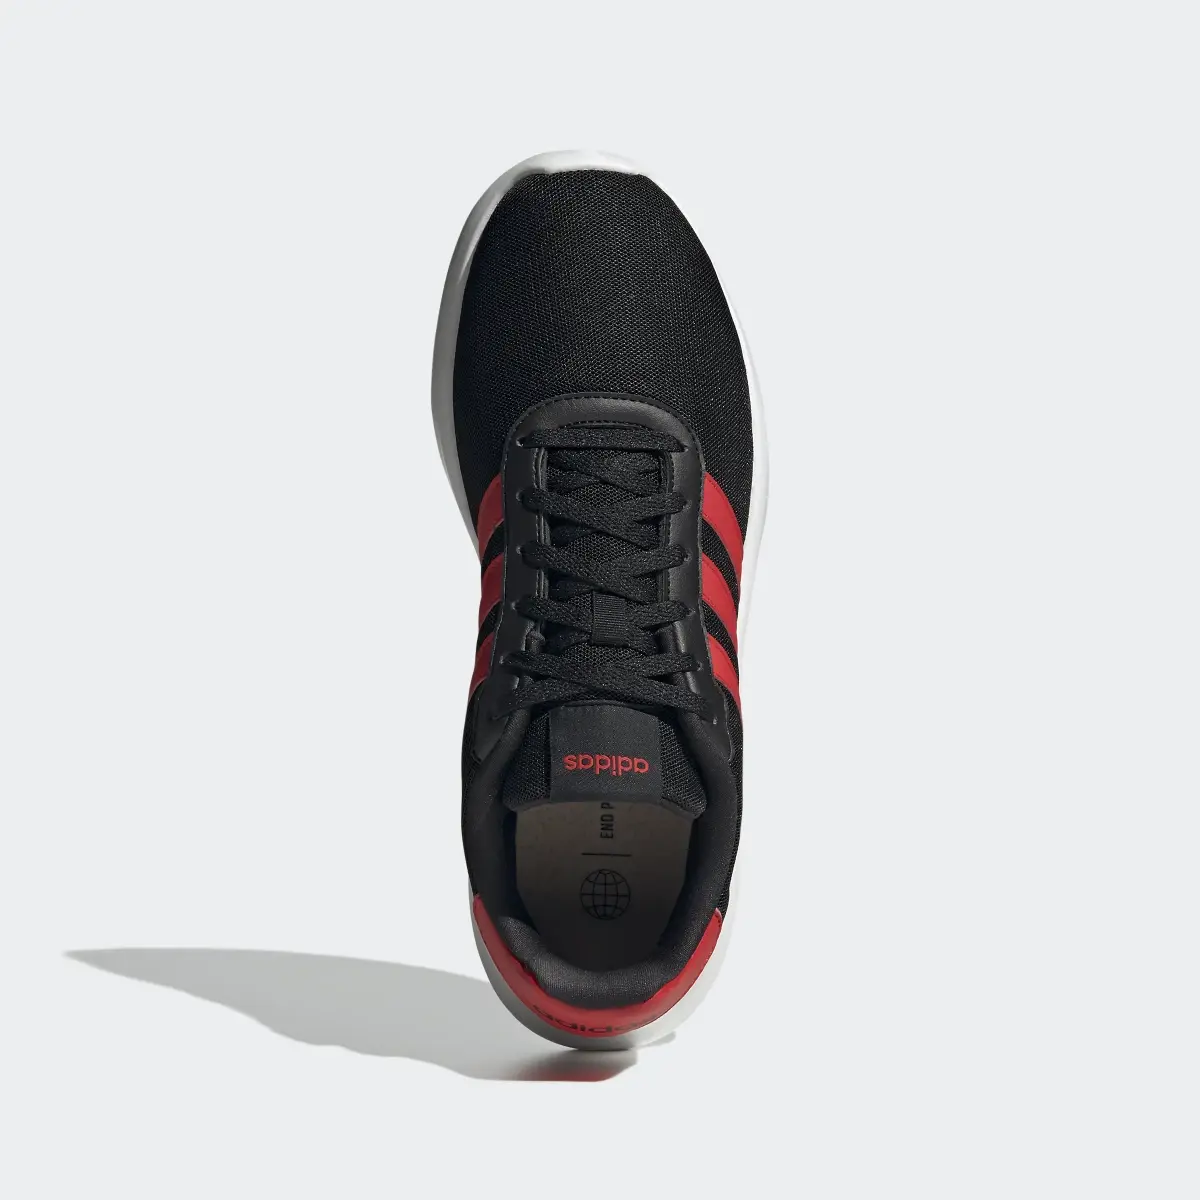 Adidas Lite Racer 3.0 Schuh. 3